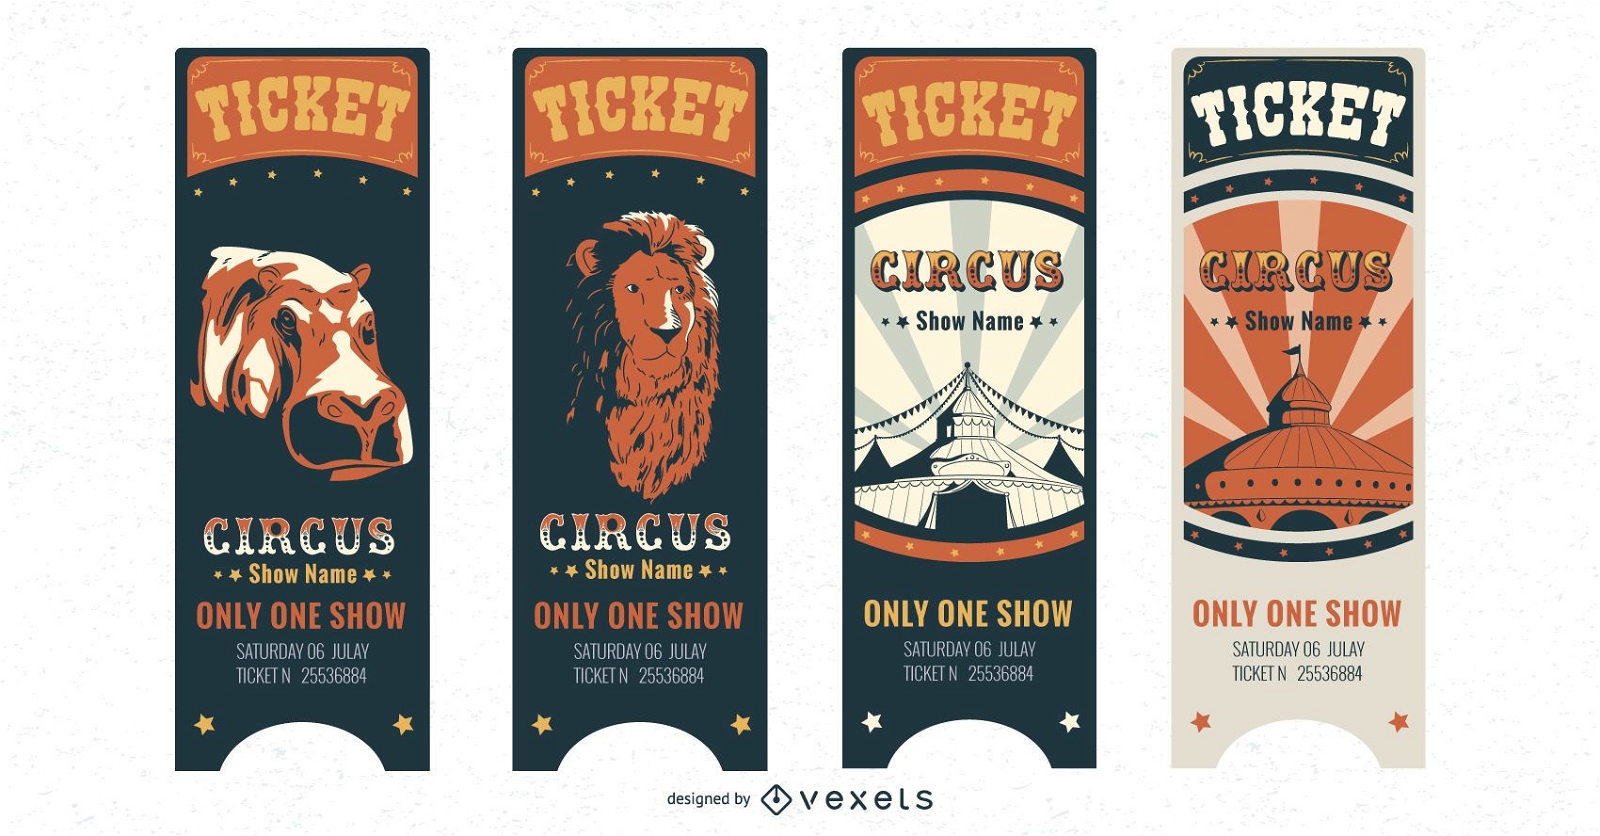 Circus tickets set